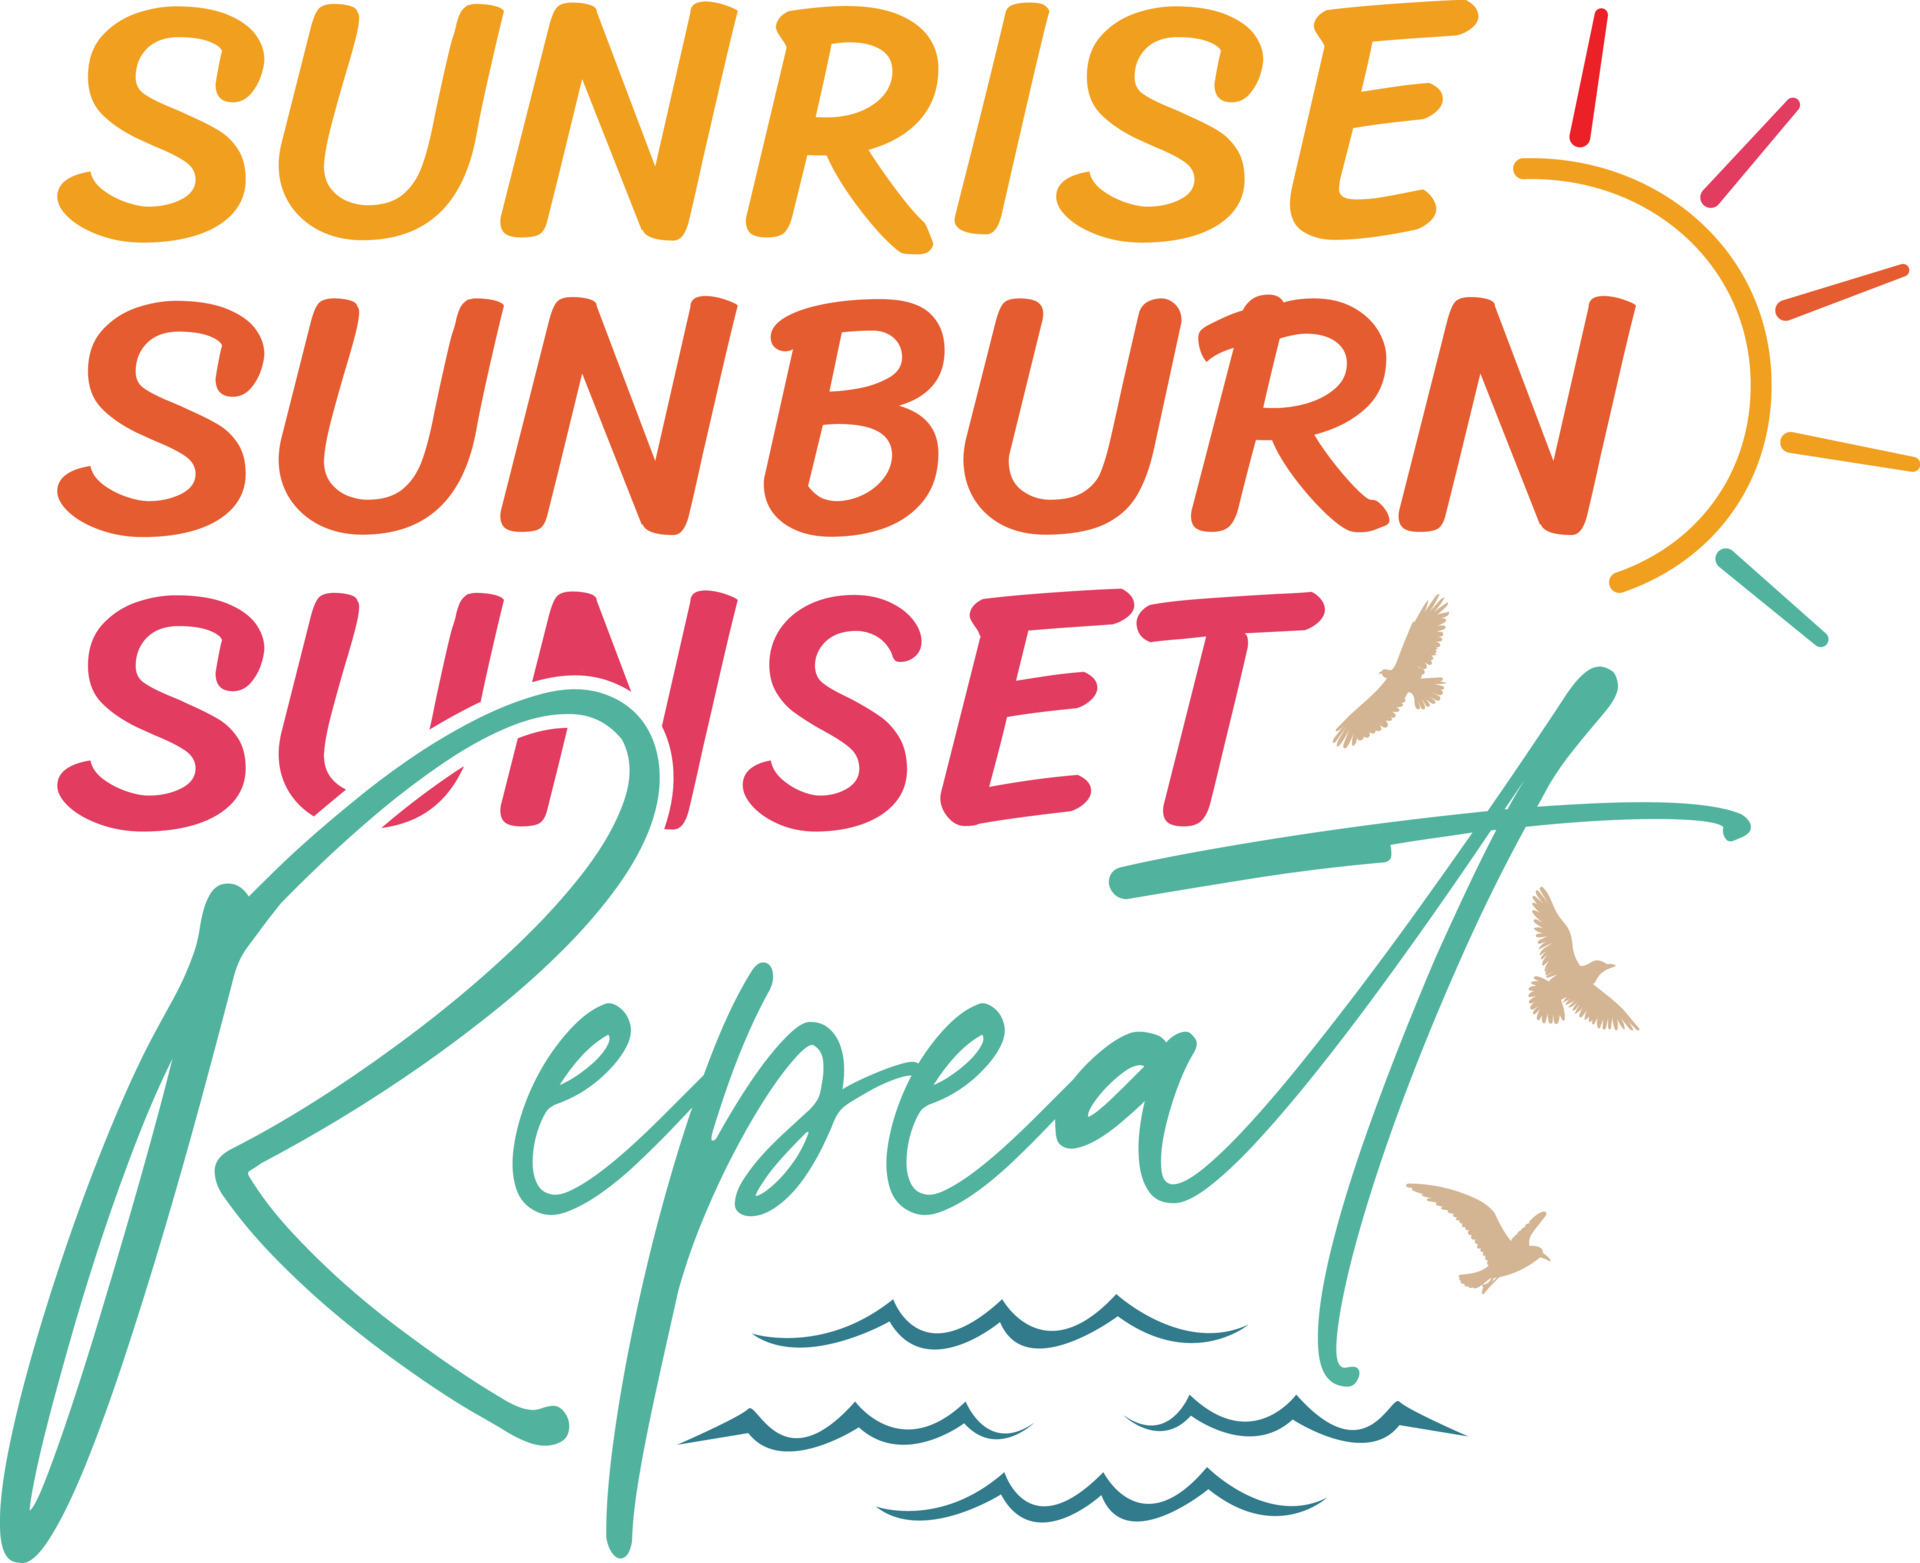 Funny saying summer Sunrise Sunburn Sunset repeat on the beach in white ...